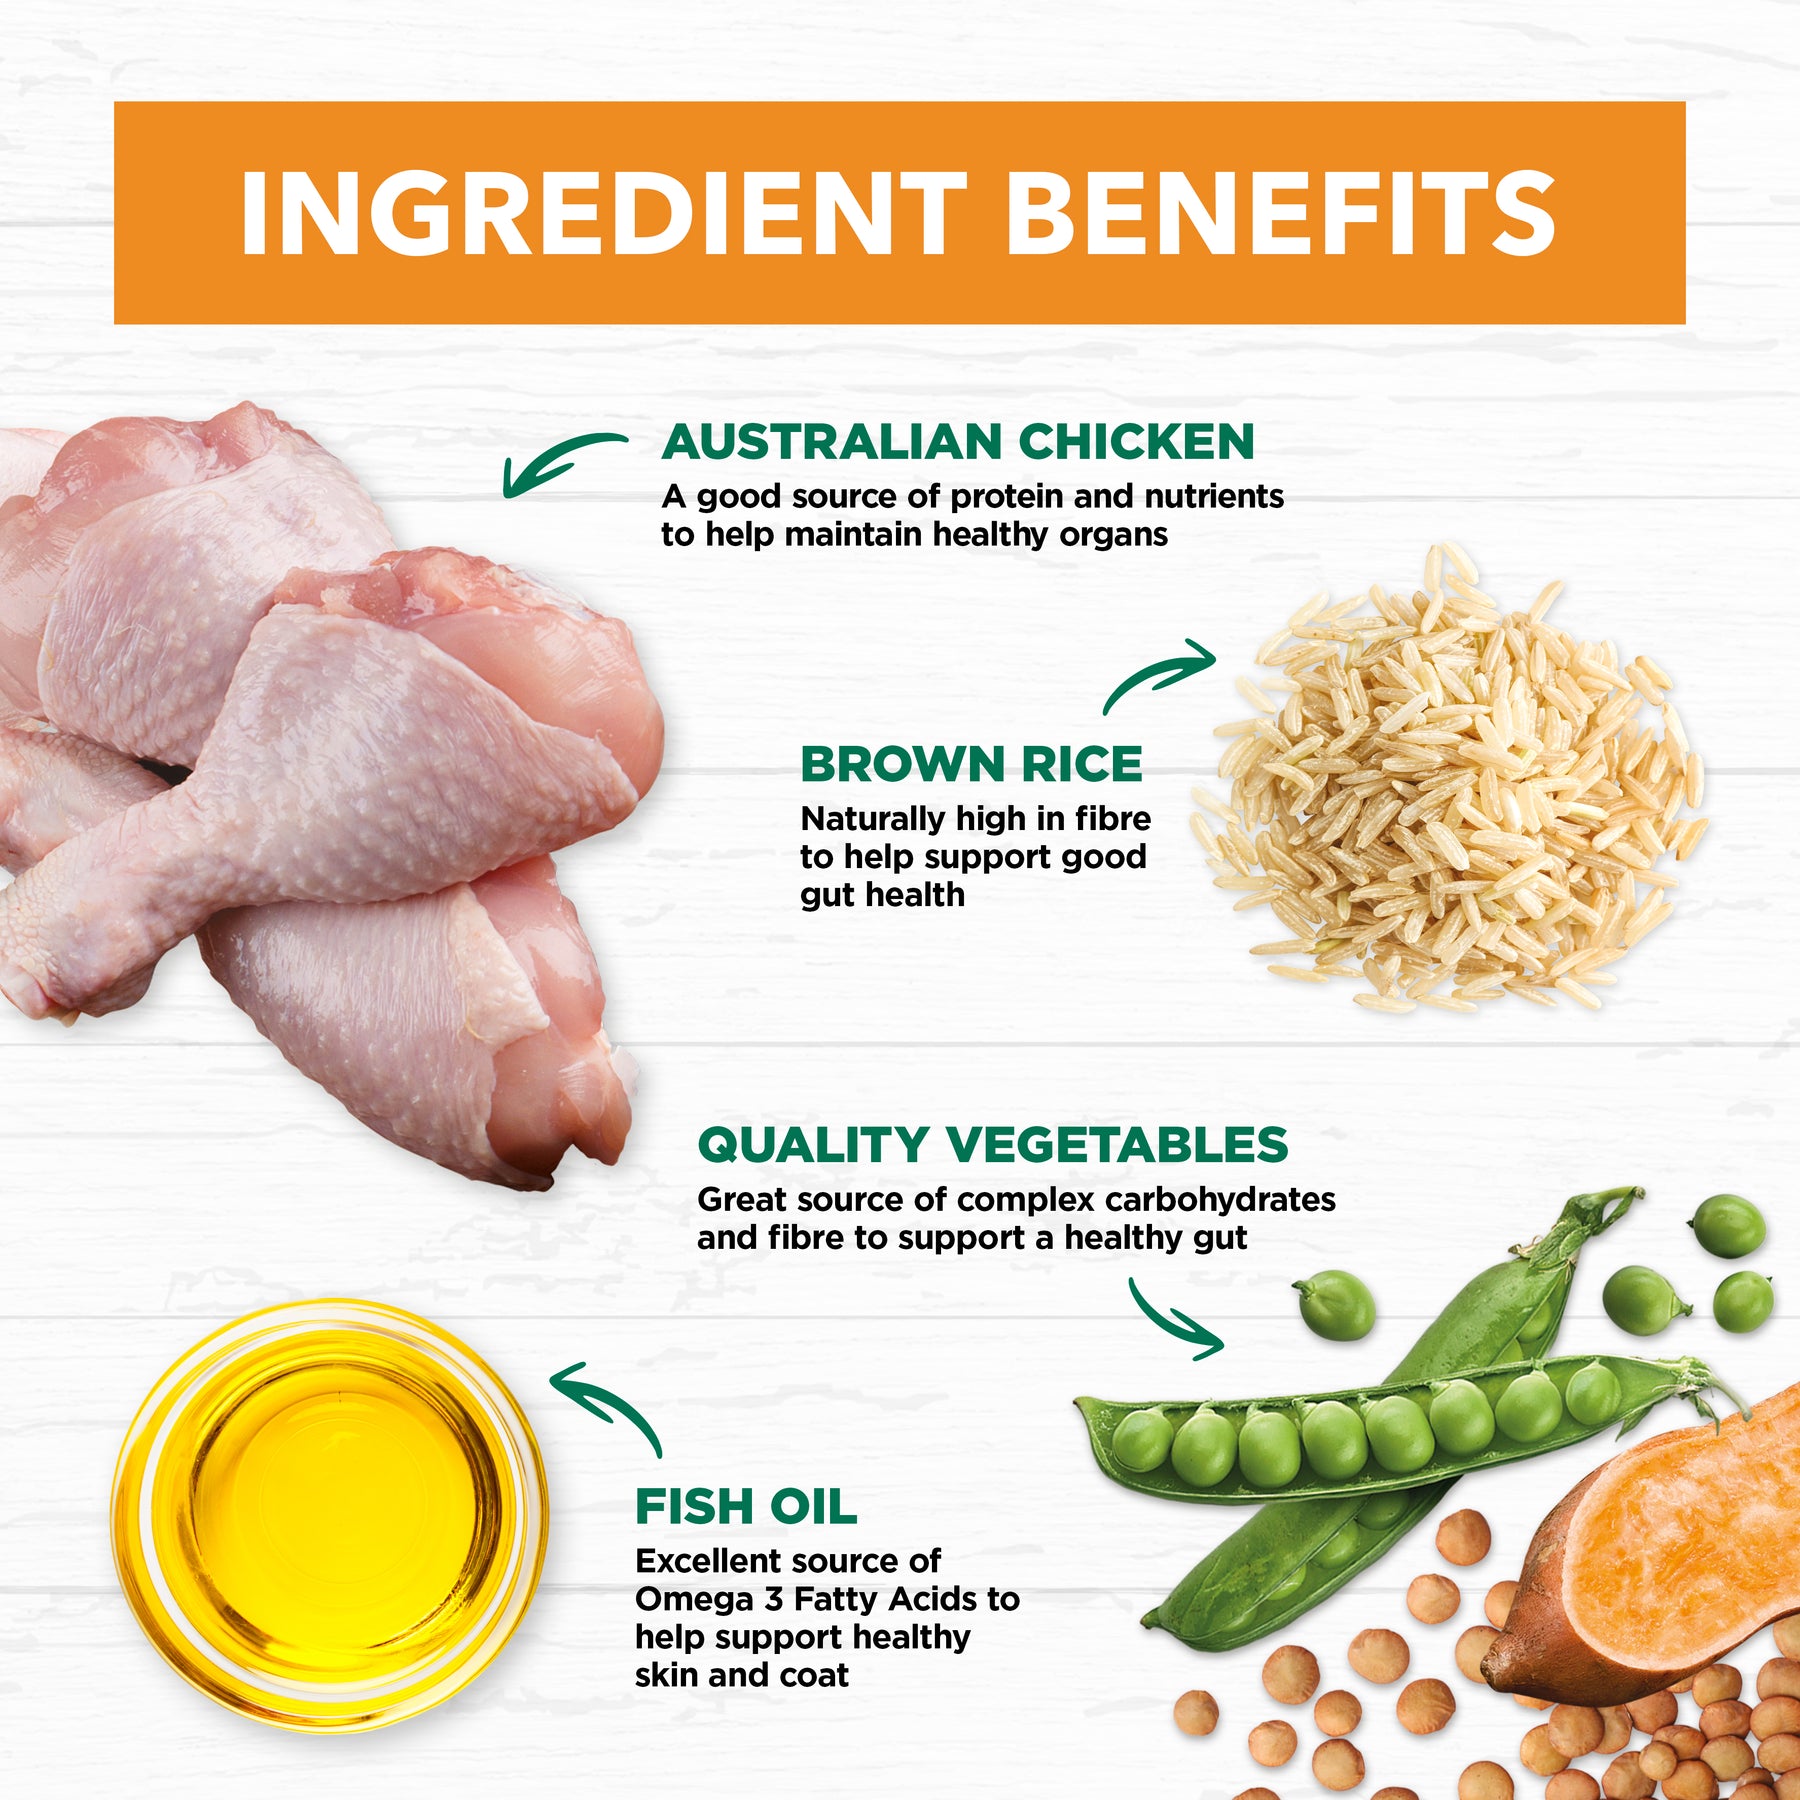 Holistic Nutrition Adult Wet Dog Food Chicken & Brown Rice Loaf 400g